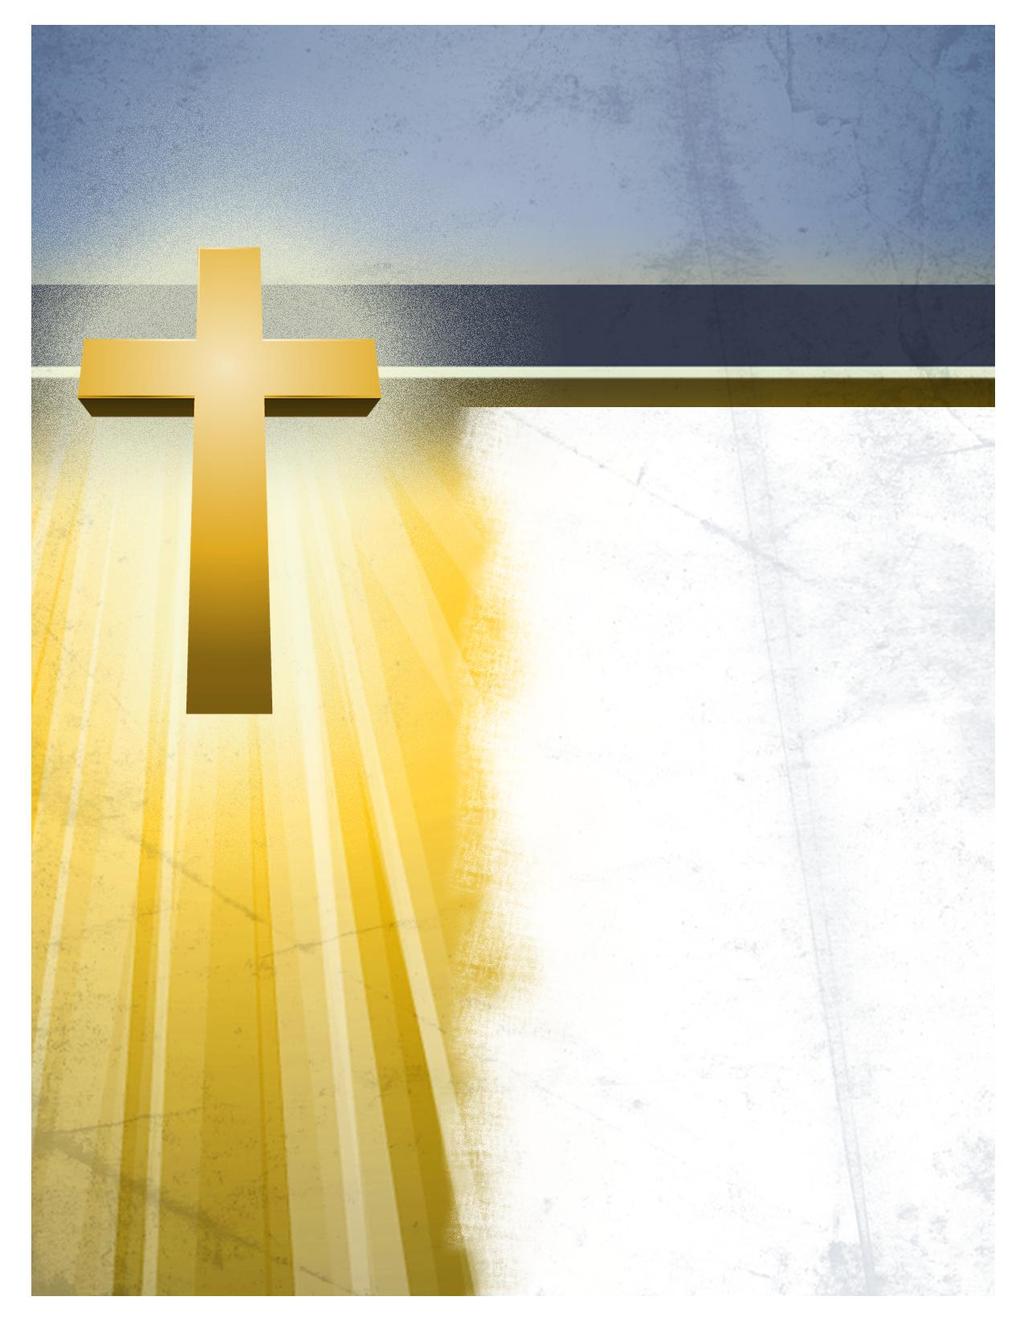 MONTHLY NEWSLETTER OF SOLOMON S TEMPLE CHURCH SEPTEMBER 2012 VOLUME 4; ISSUE 9 WWW.SOLOMONS-TEMPLECHURCH.